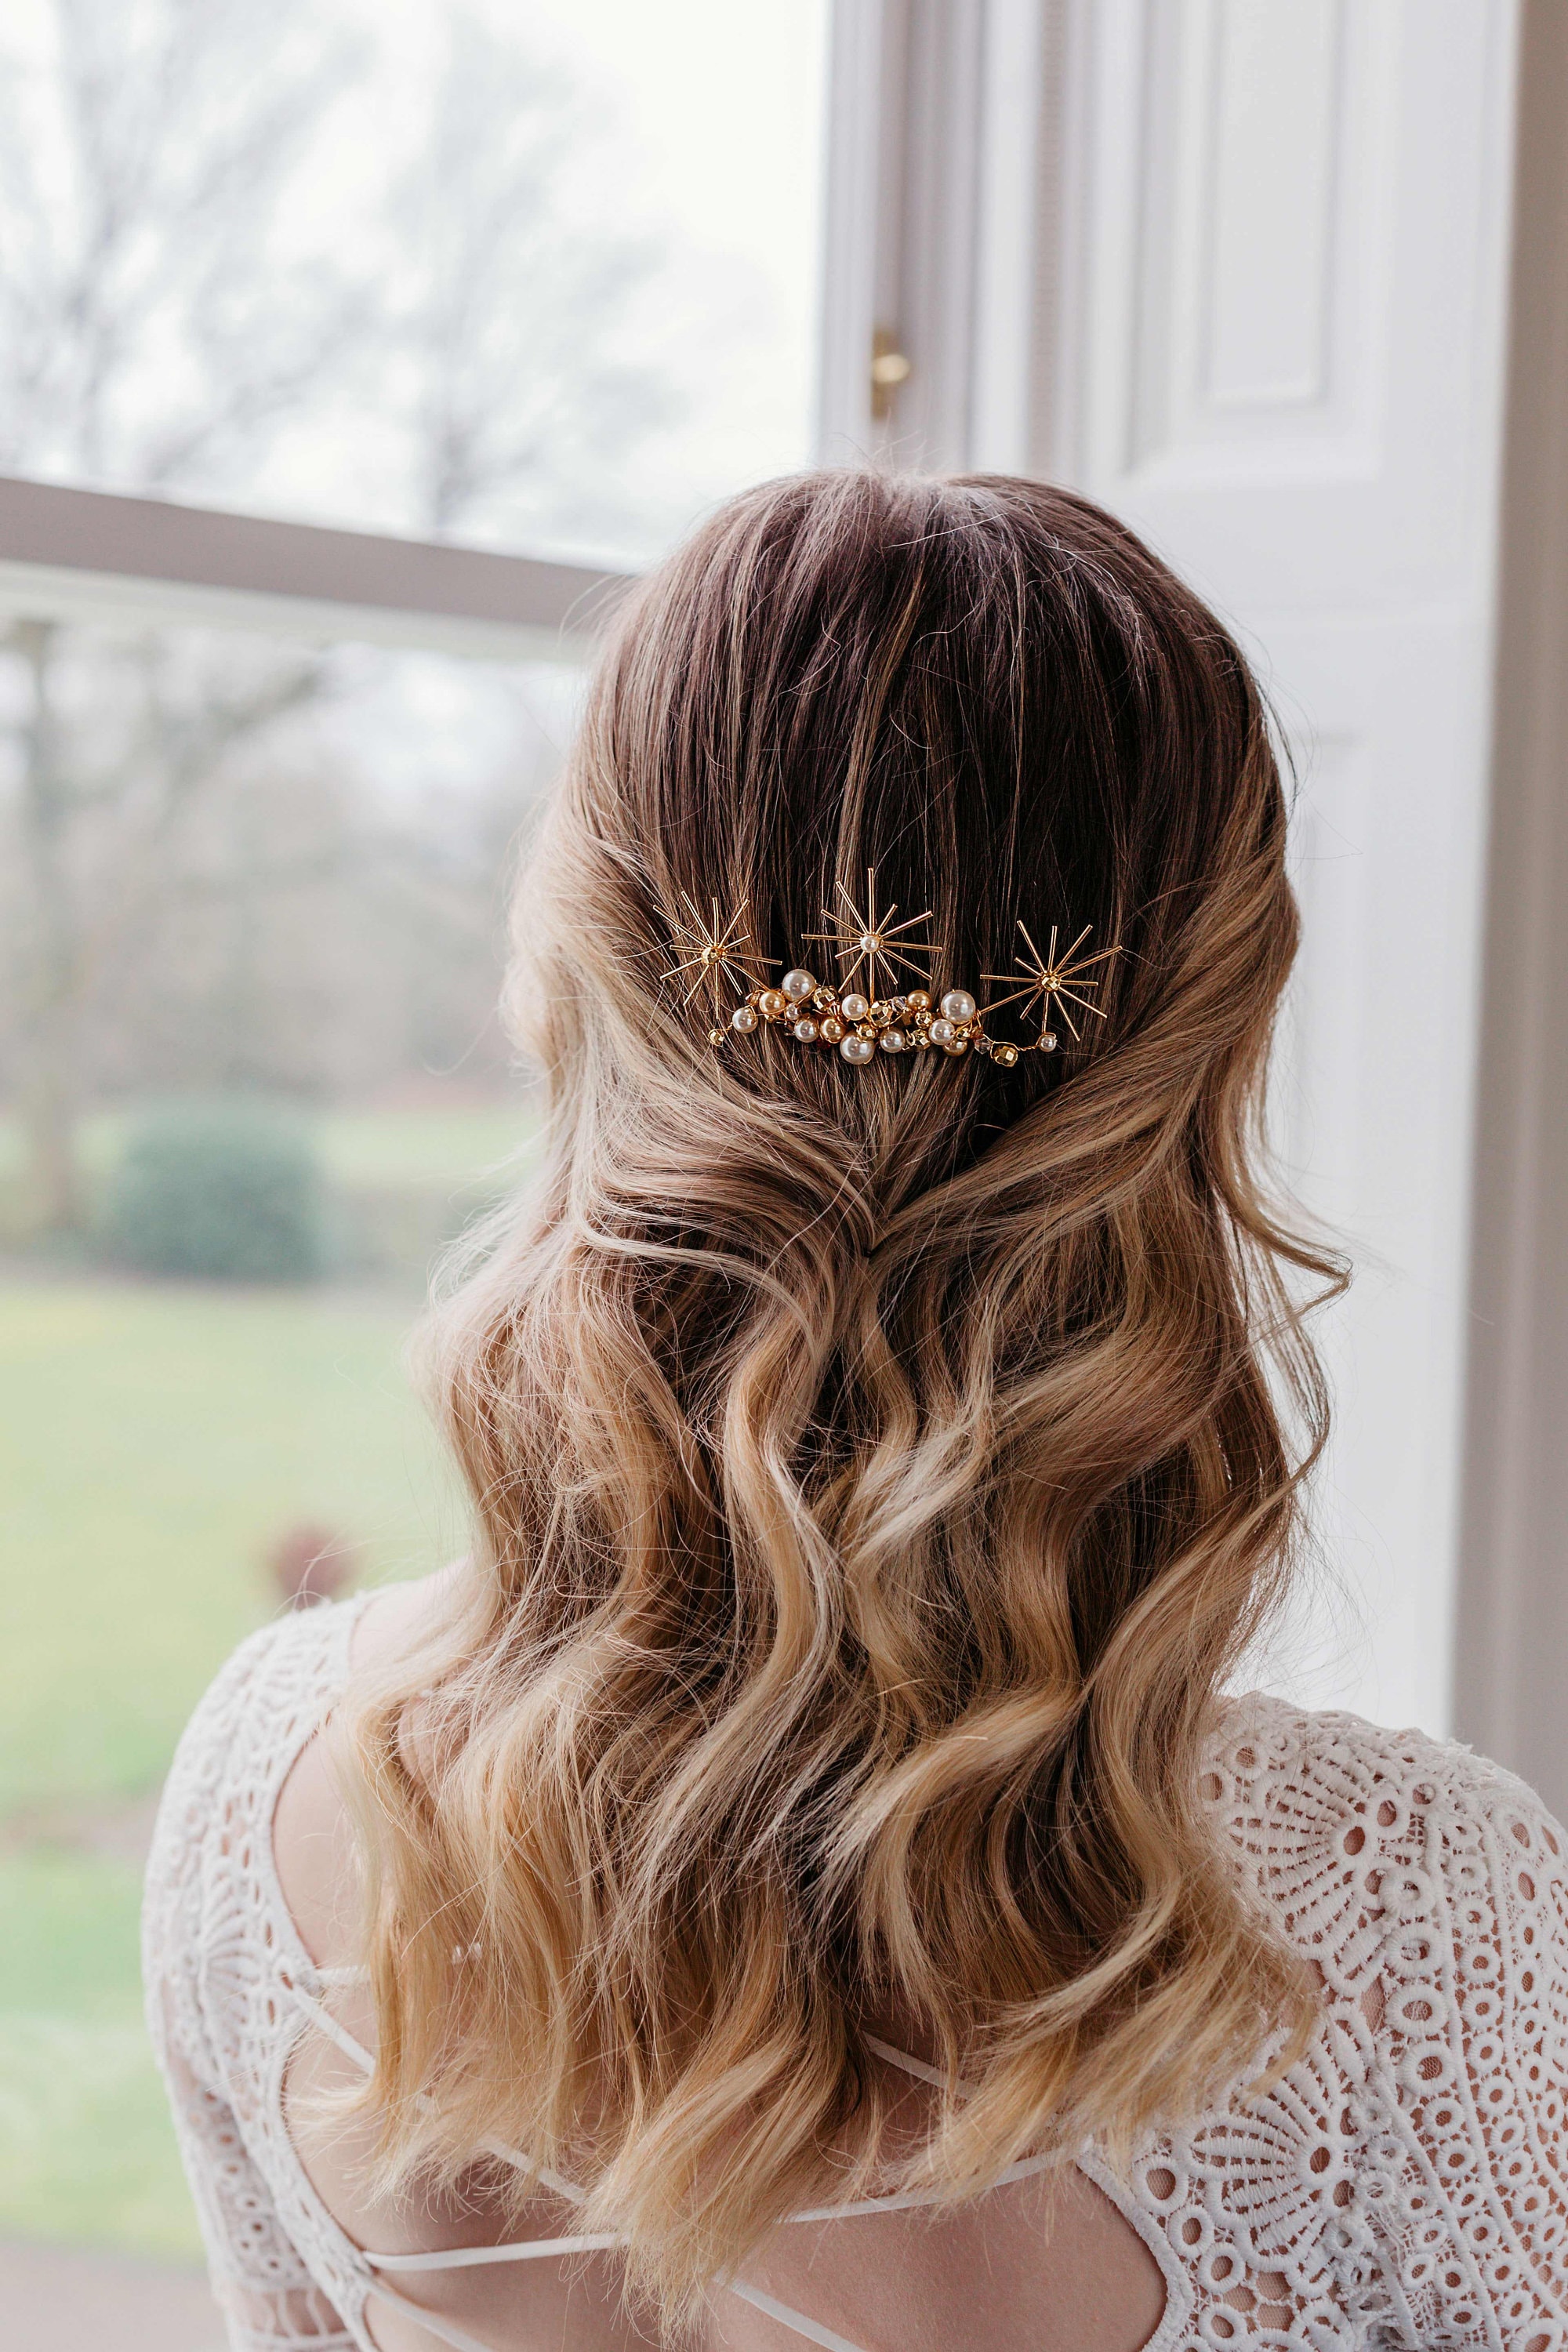 Bodas Accesorios Accesorios para el cabello Peinetas peine de pelo de boda estrella de oro accesorio de cabello dorado de boda Peine de cristal de oro nupcial tocado de oro accesorio de cabello de cristal Estilo:#4018. 